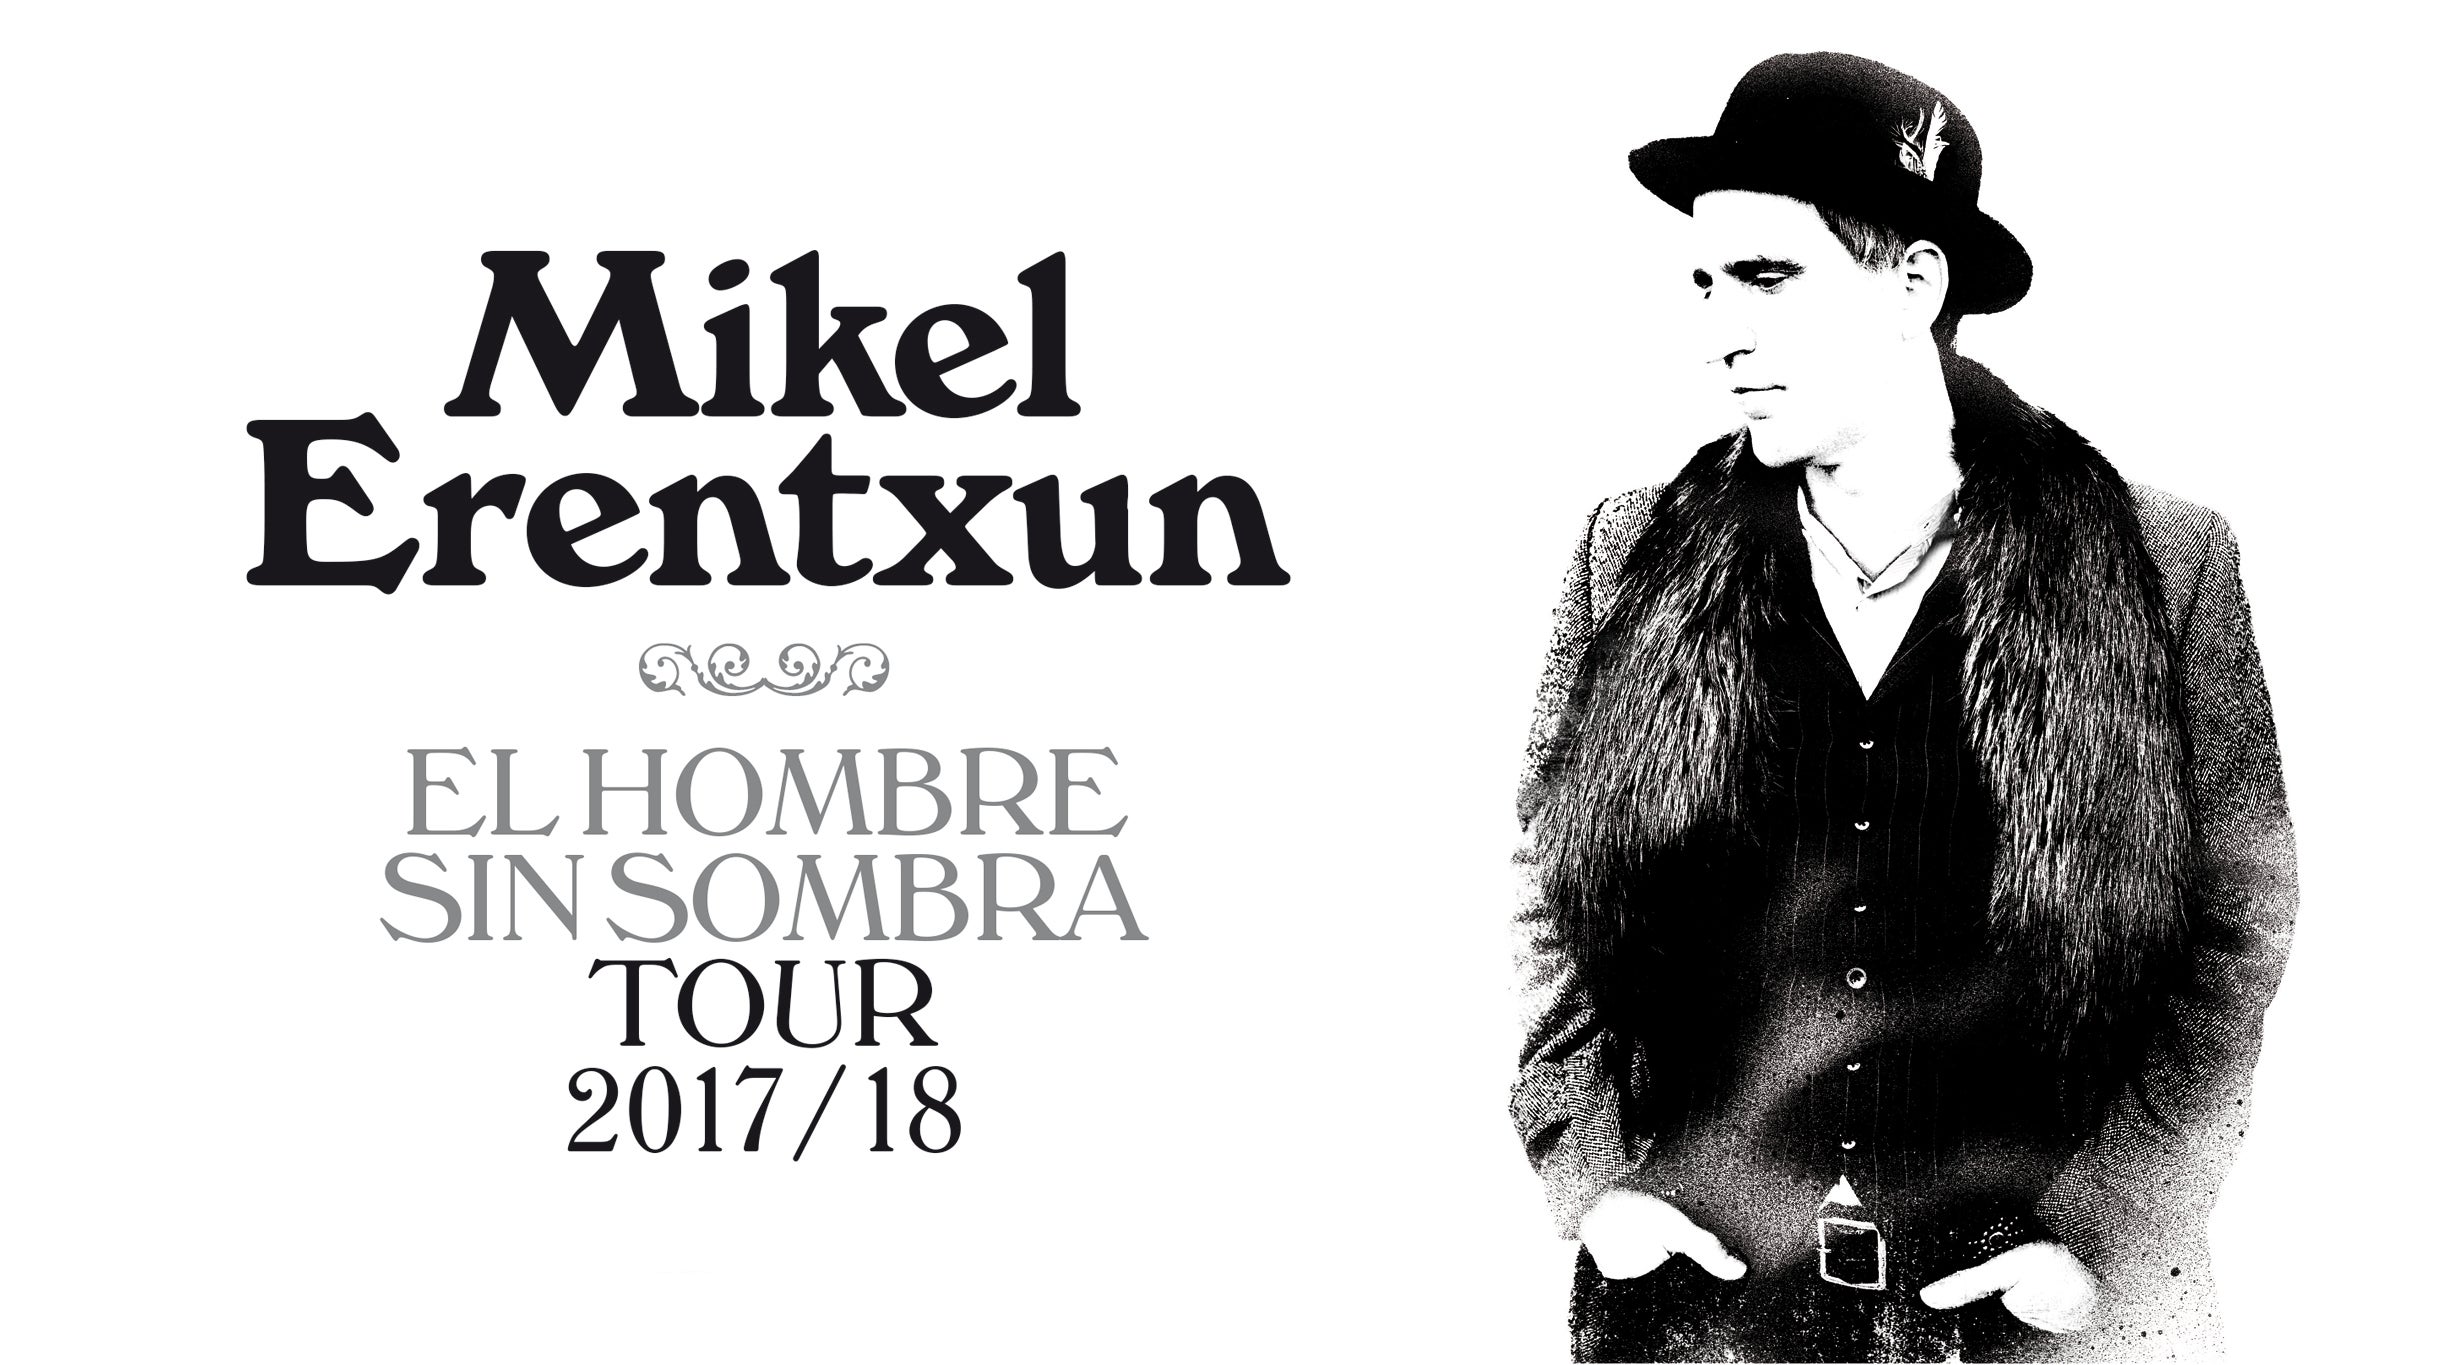 Mikel Erentxun - El último Vuelo del Hombre Bala USA Tour 2020 in Anaheim promo photo for Live Nation Mobile App presale offer code